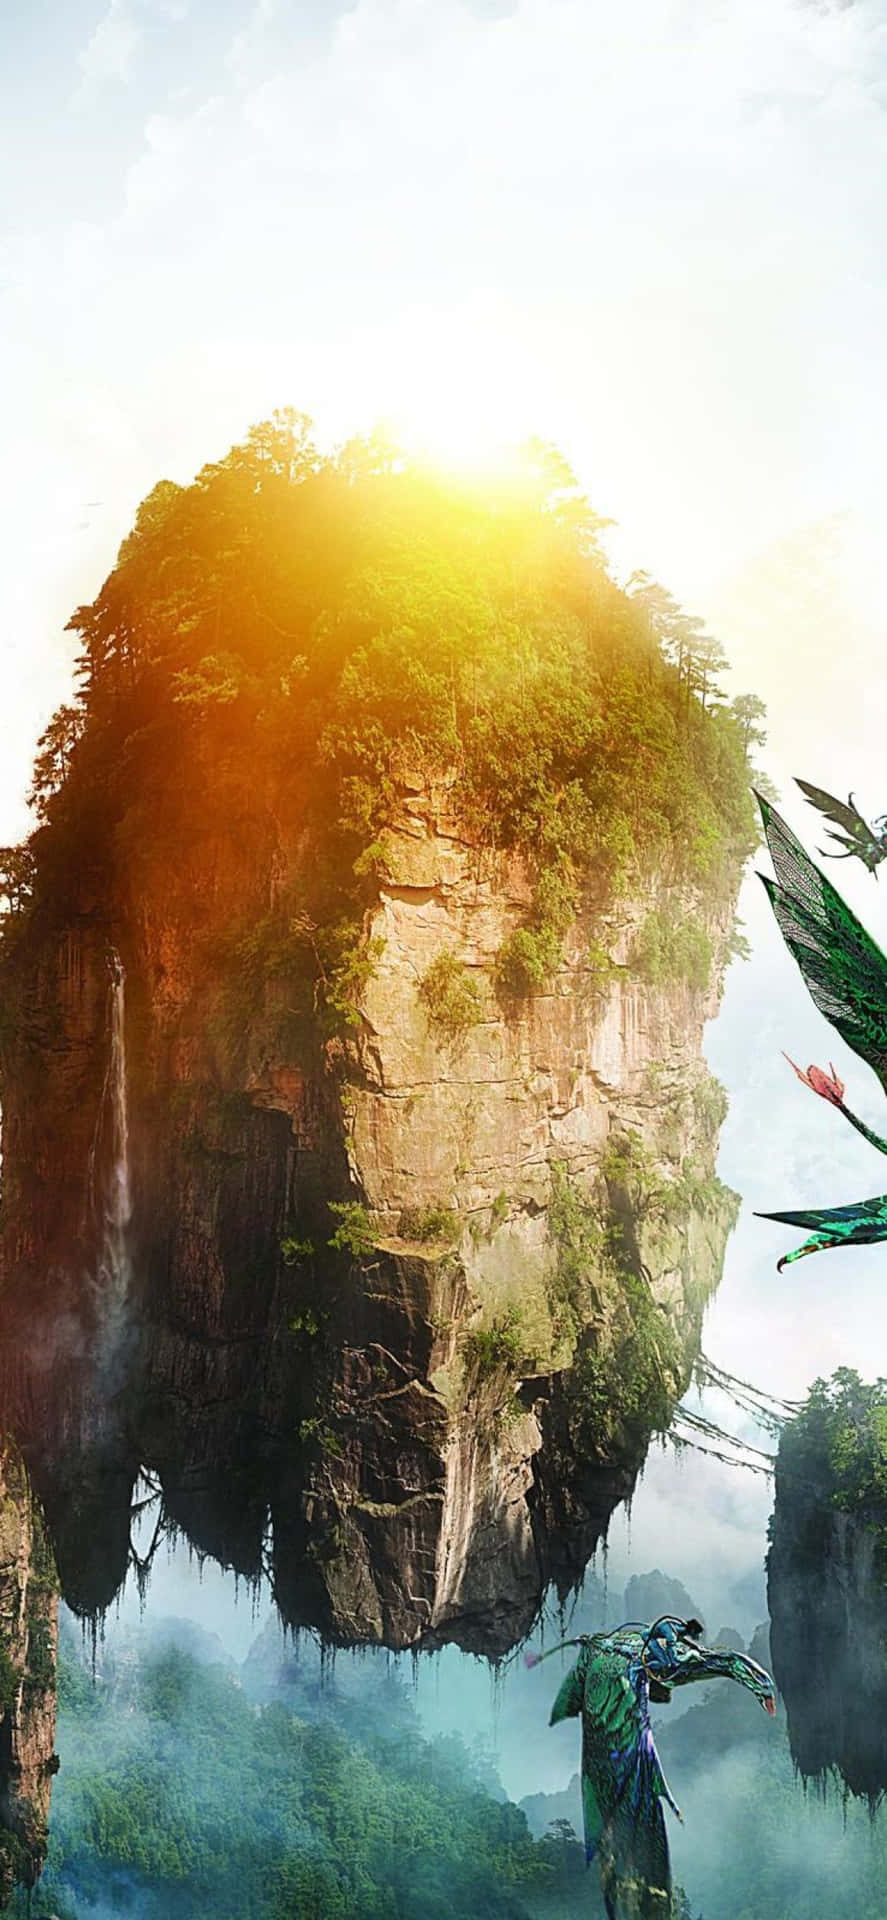 "Explore the Mystical World of Pandora in Avatar" Wallpaper